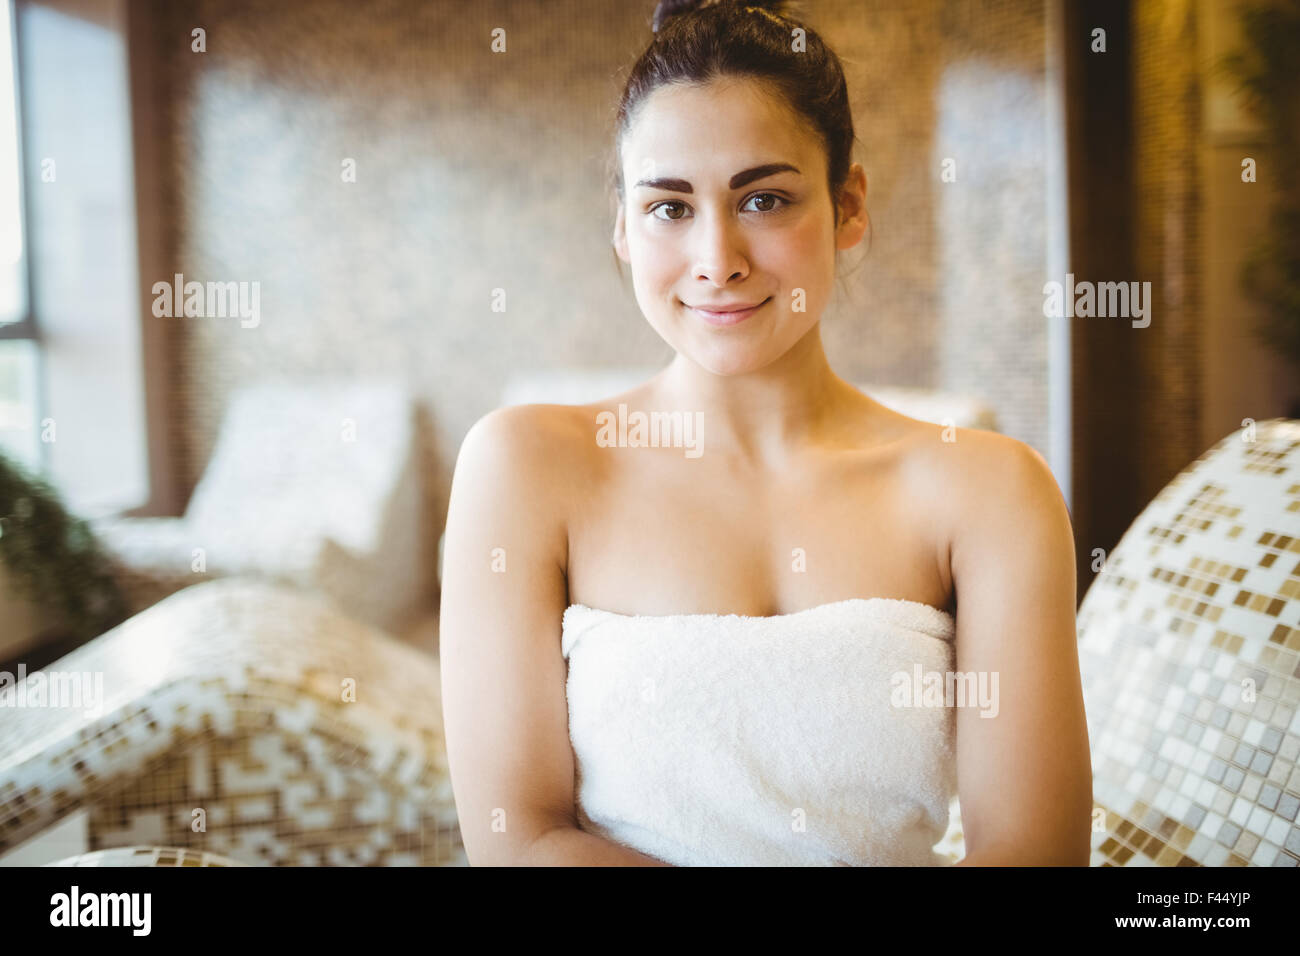 Woman sitting down wearing a towel Stock Photo